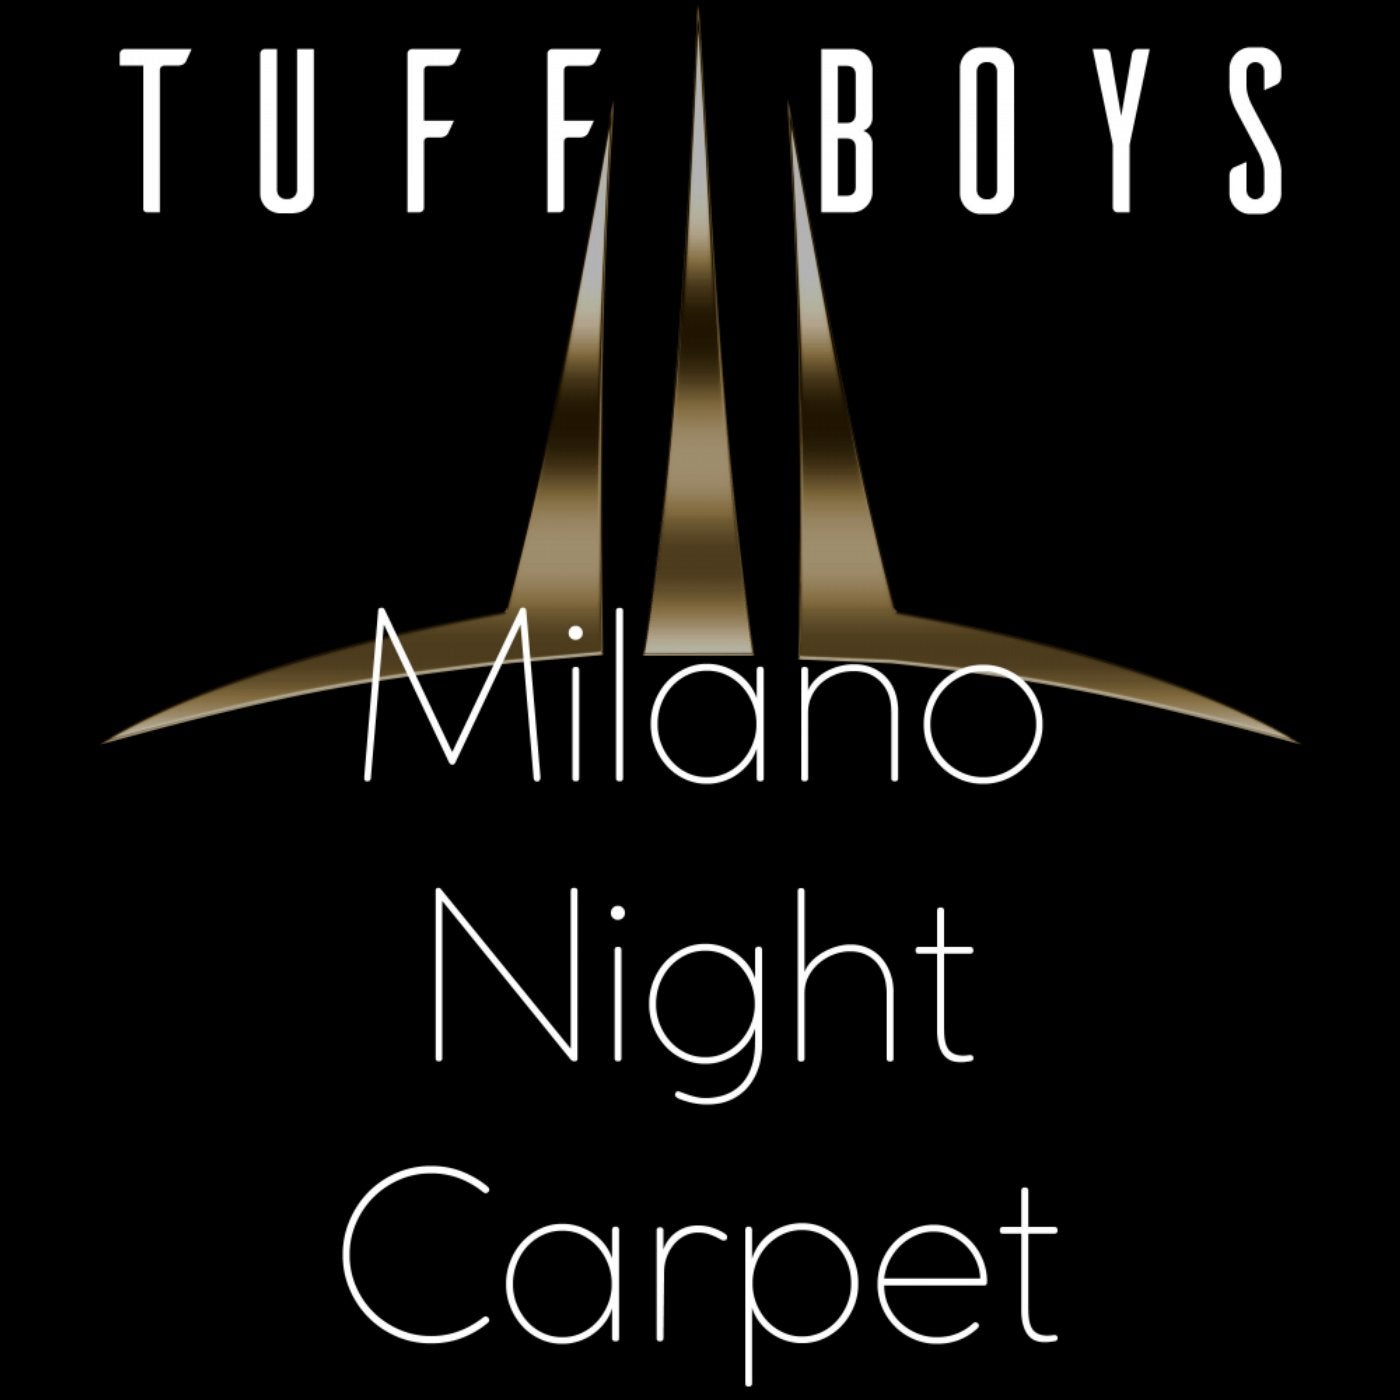 Milano Night Carpet